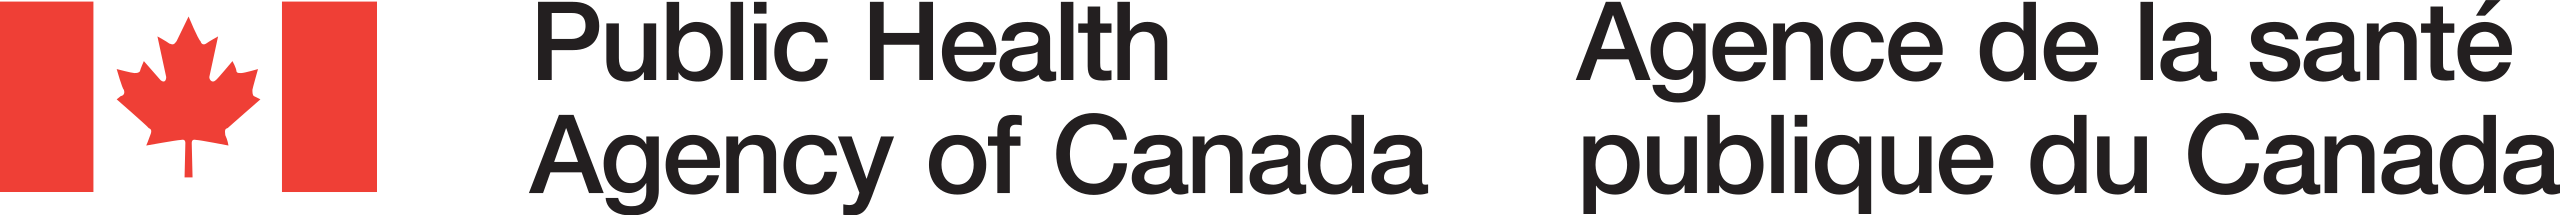 public_health_agency_of_canada_(logo).png